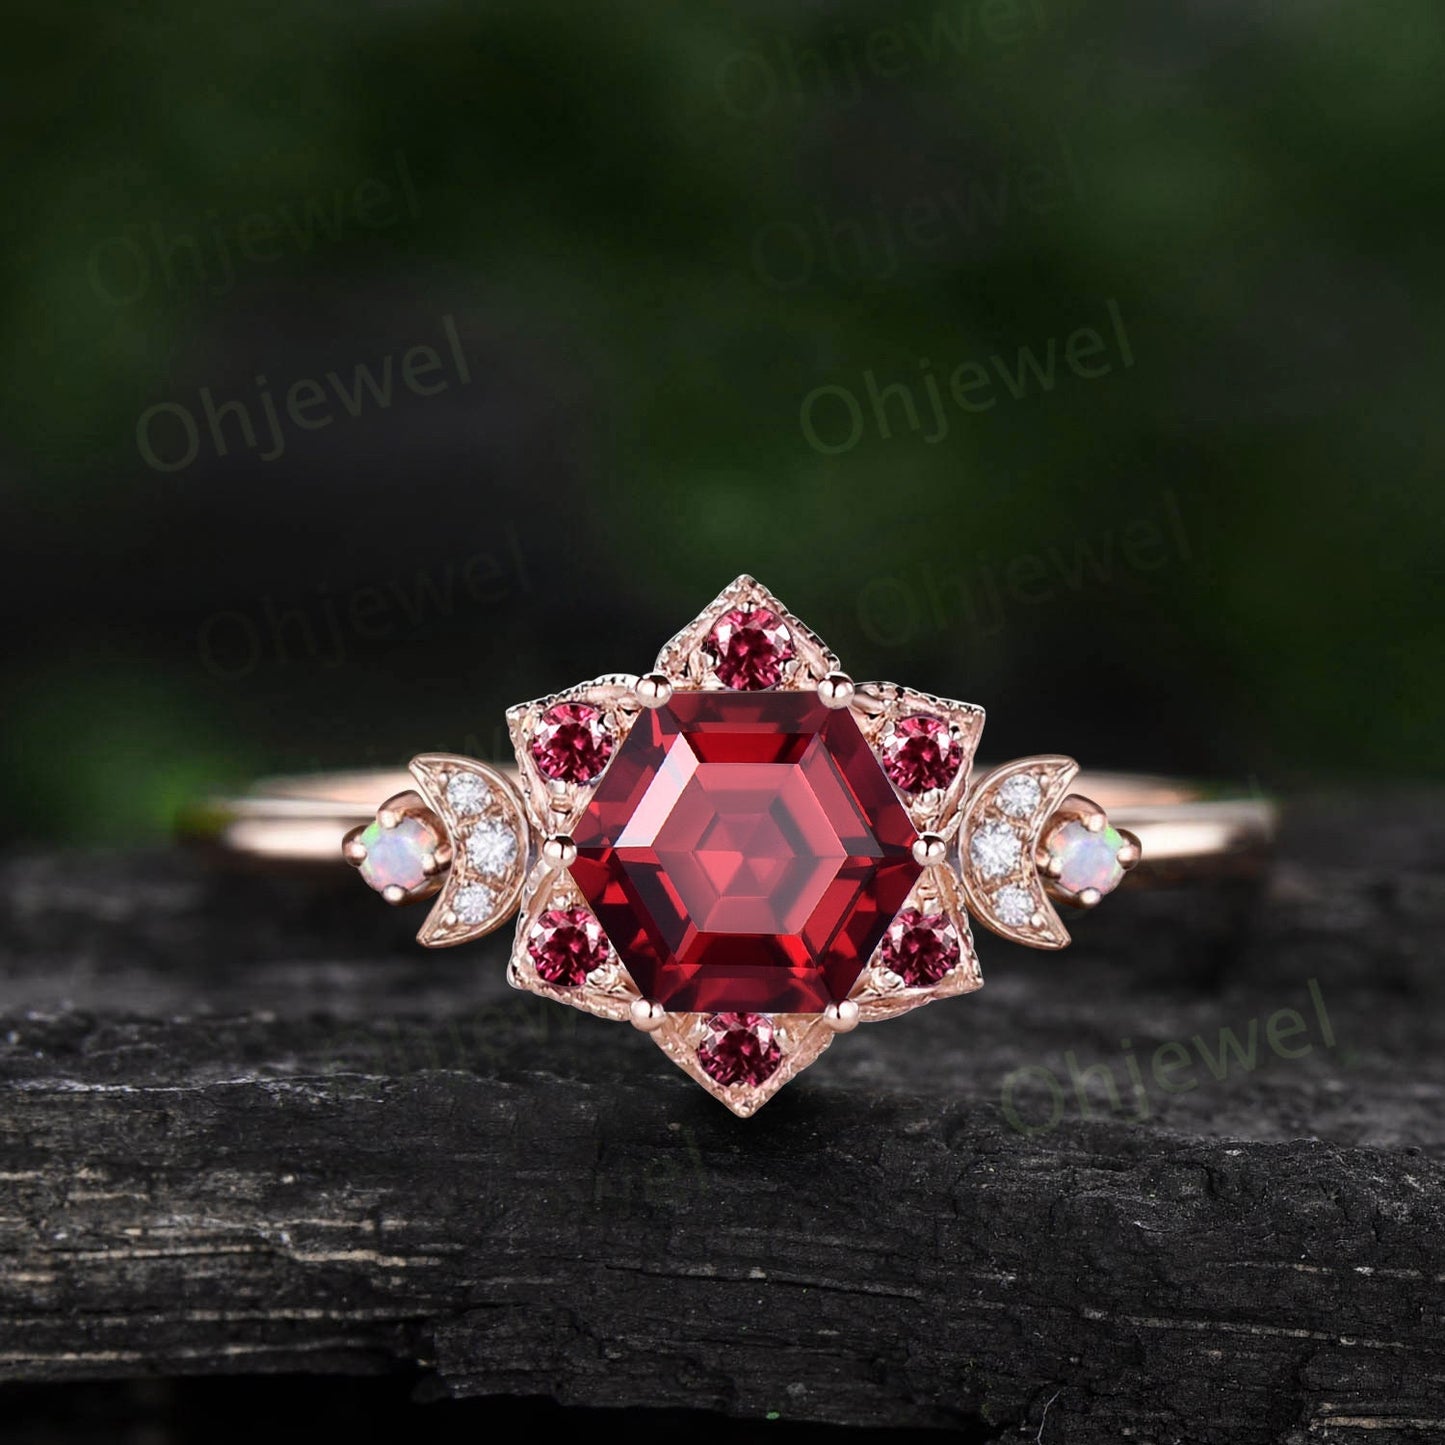 Vintage Hexagon cut red ruby engagement ring solid 14k yellow gold milgrain floral moon opal diamond ring women gemstone wedding ring gift